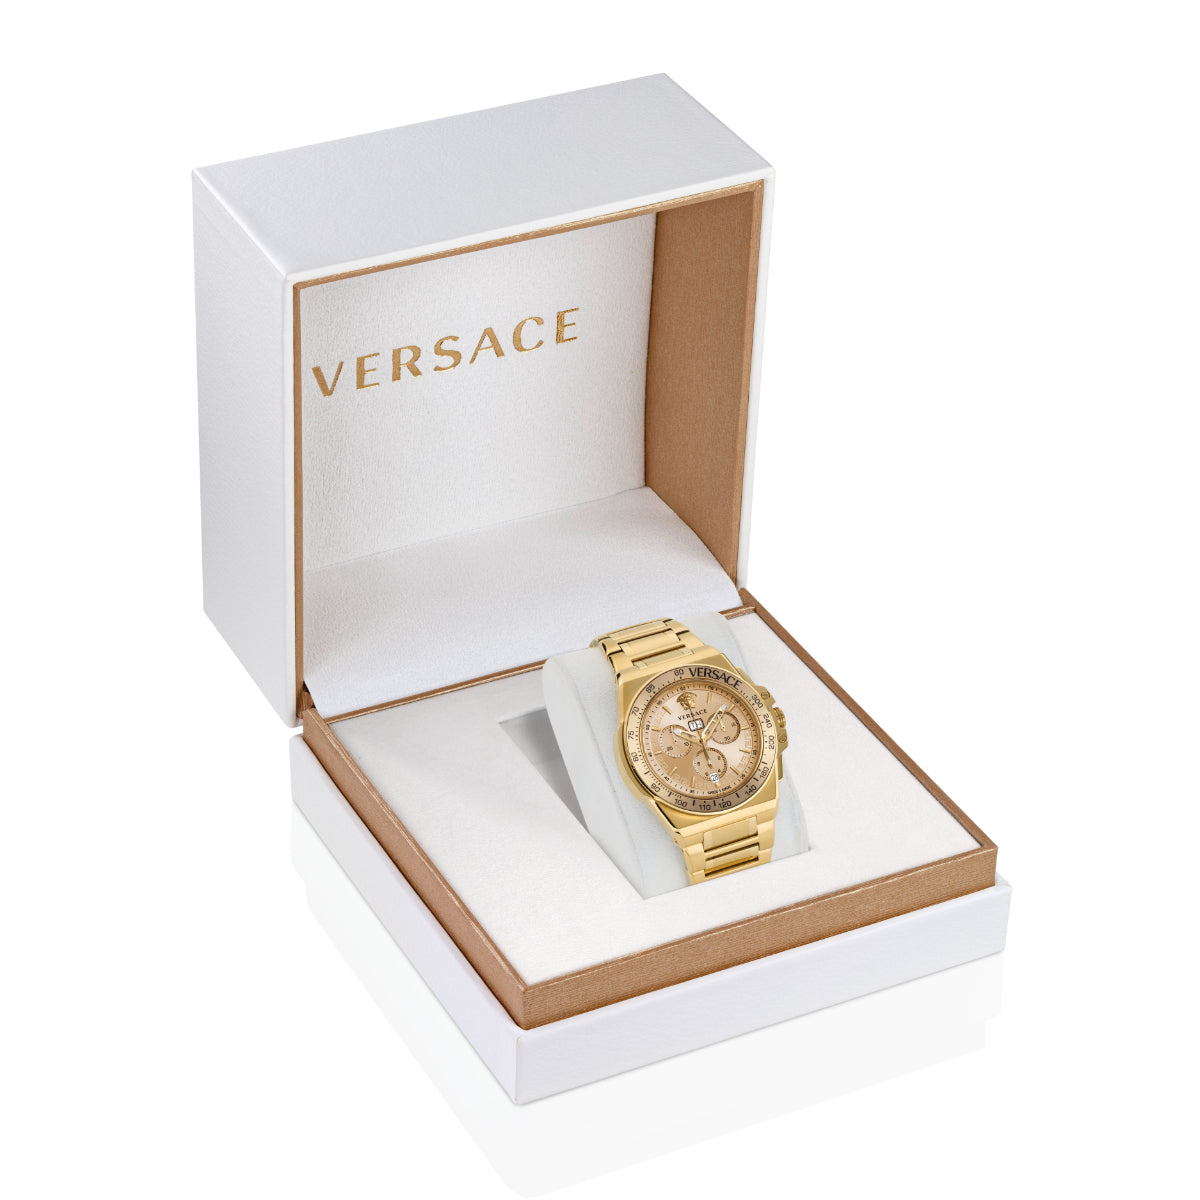 Versace VE7C00723 - Greca Time GMT Watch •